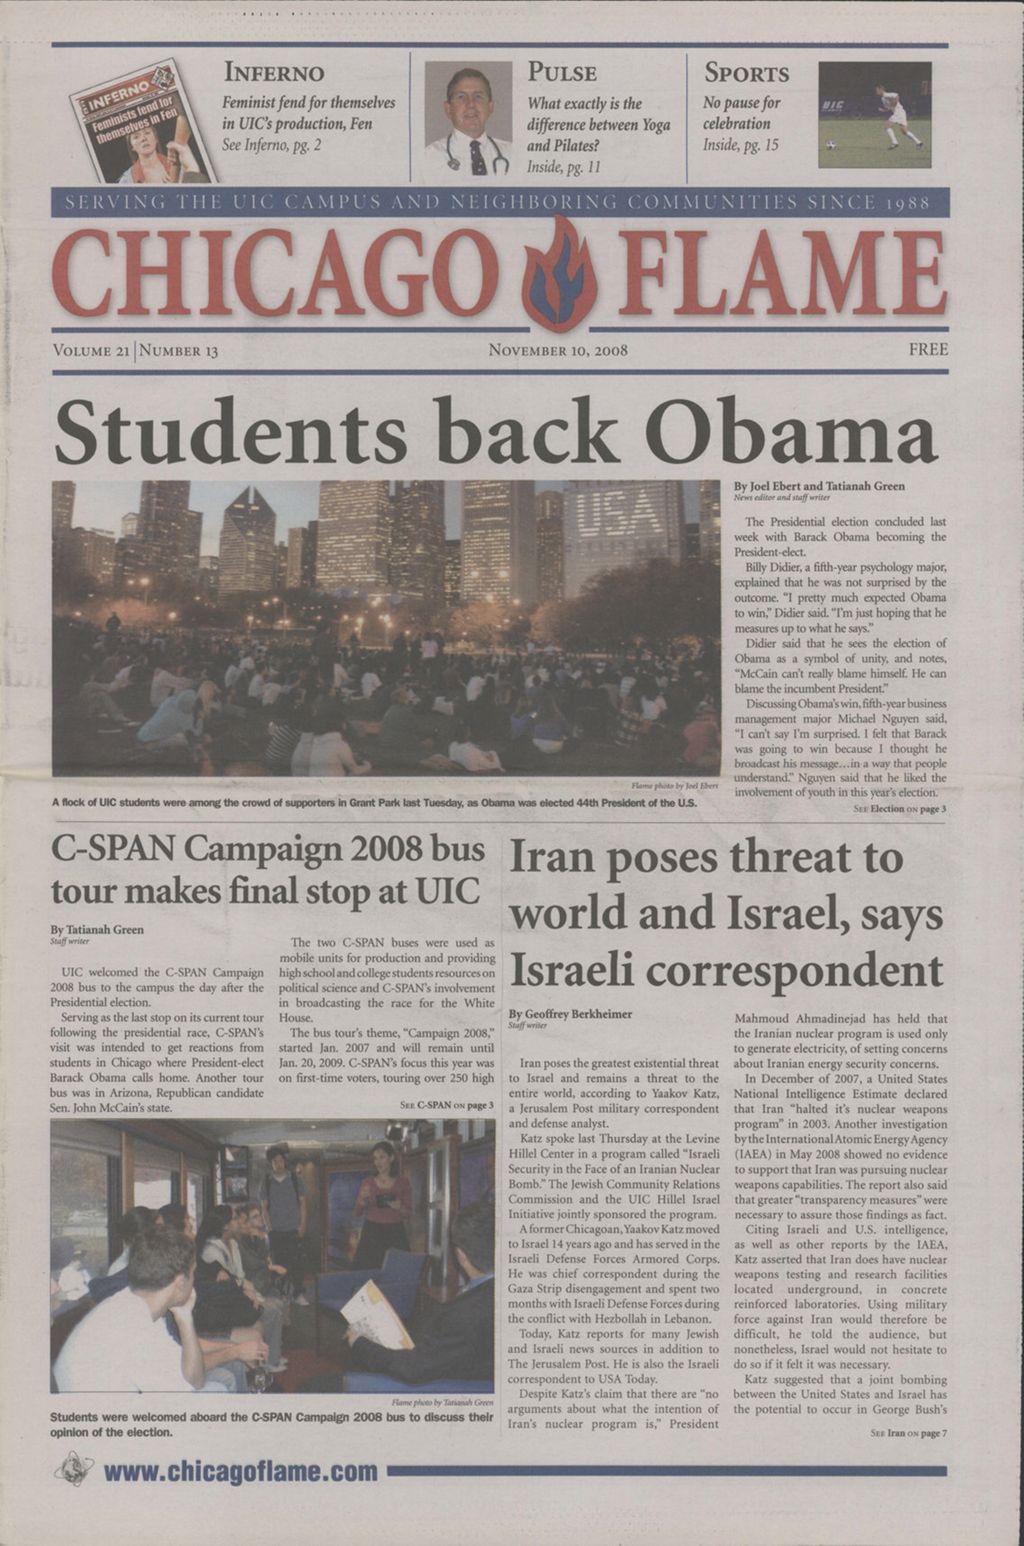 Miniature of Chicago Flame (November 10, 2008)